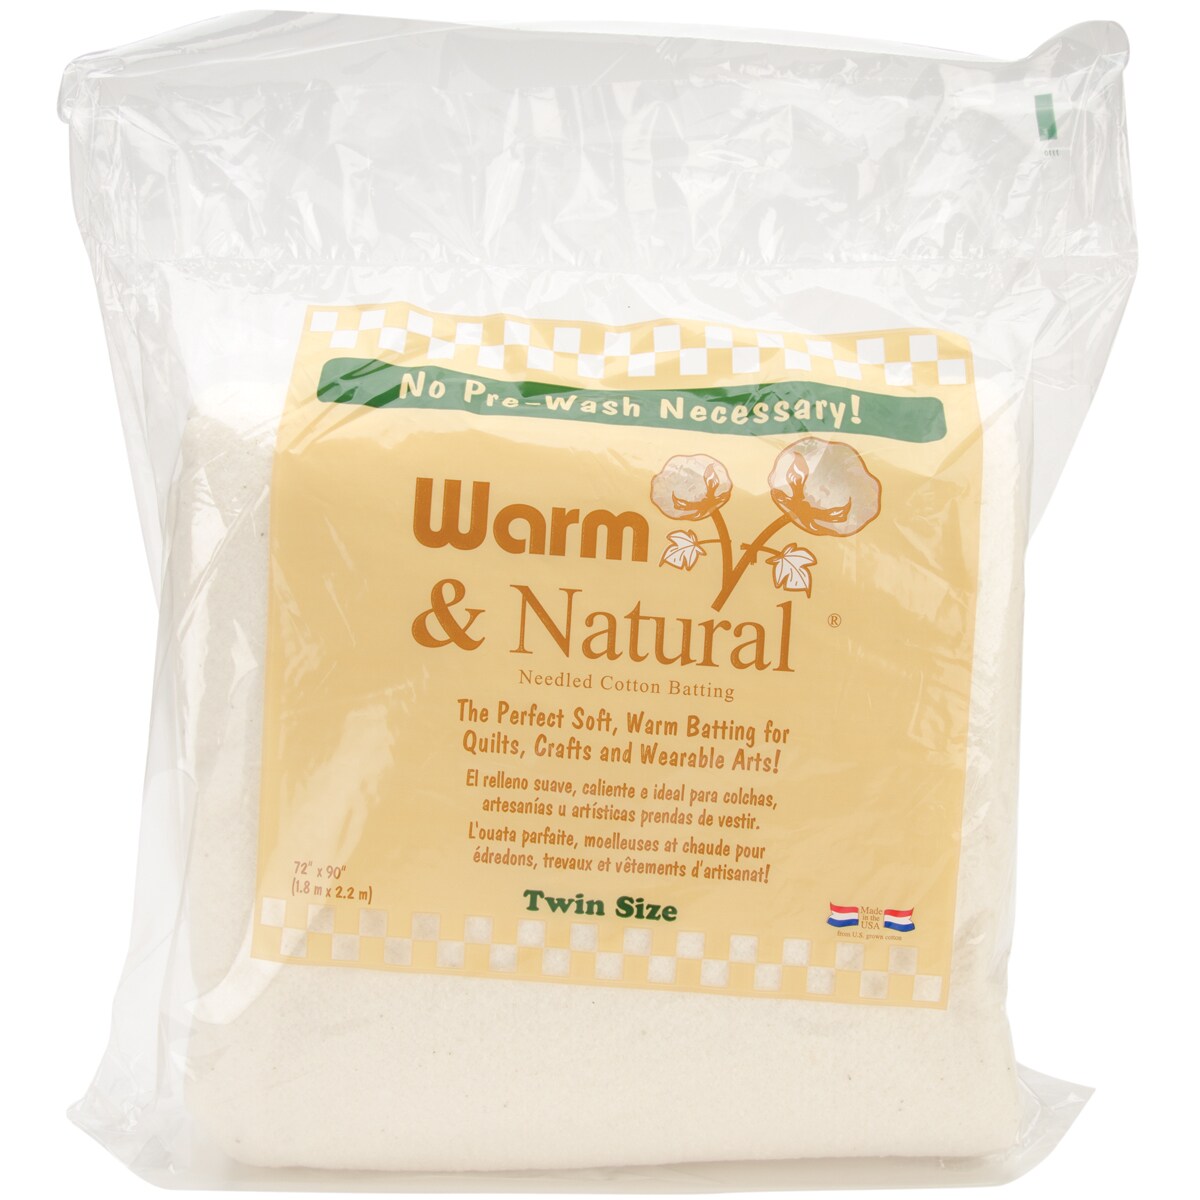 Warm & Natural® Twin Cotton Batting, 72 x 90